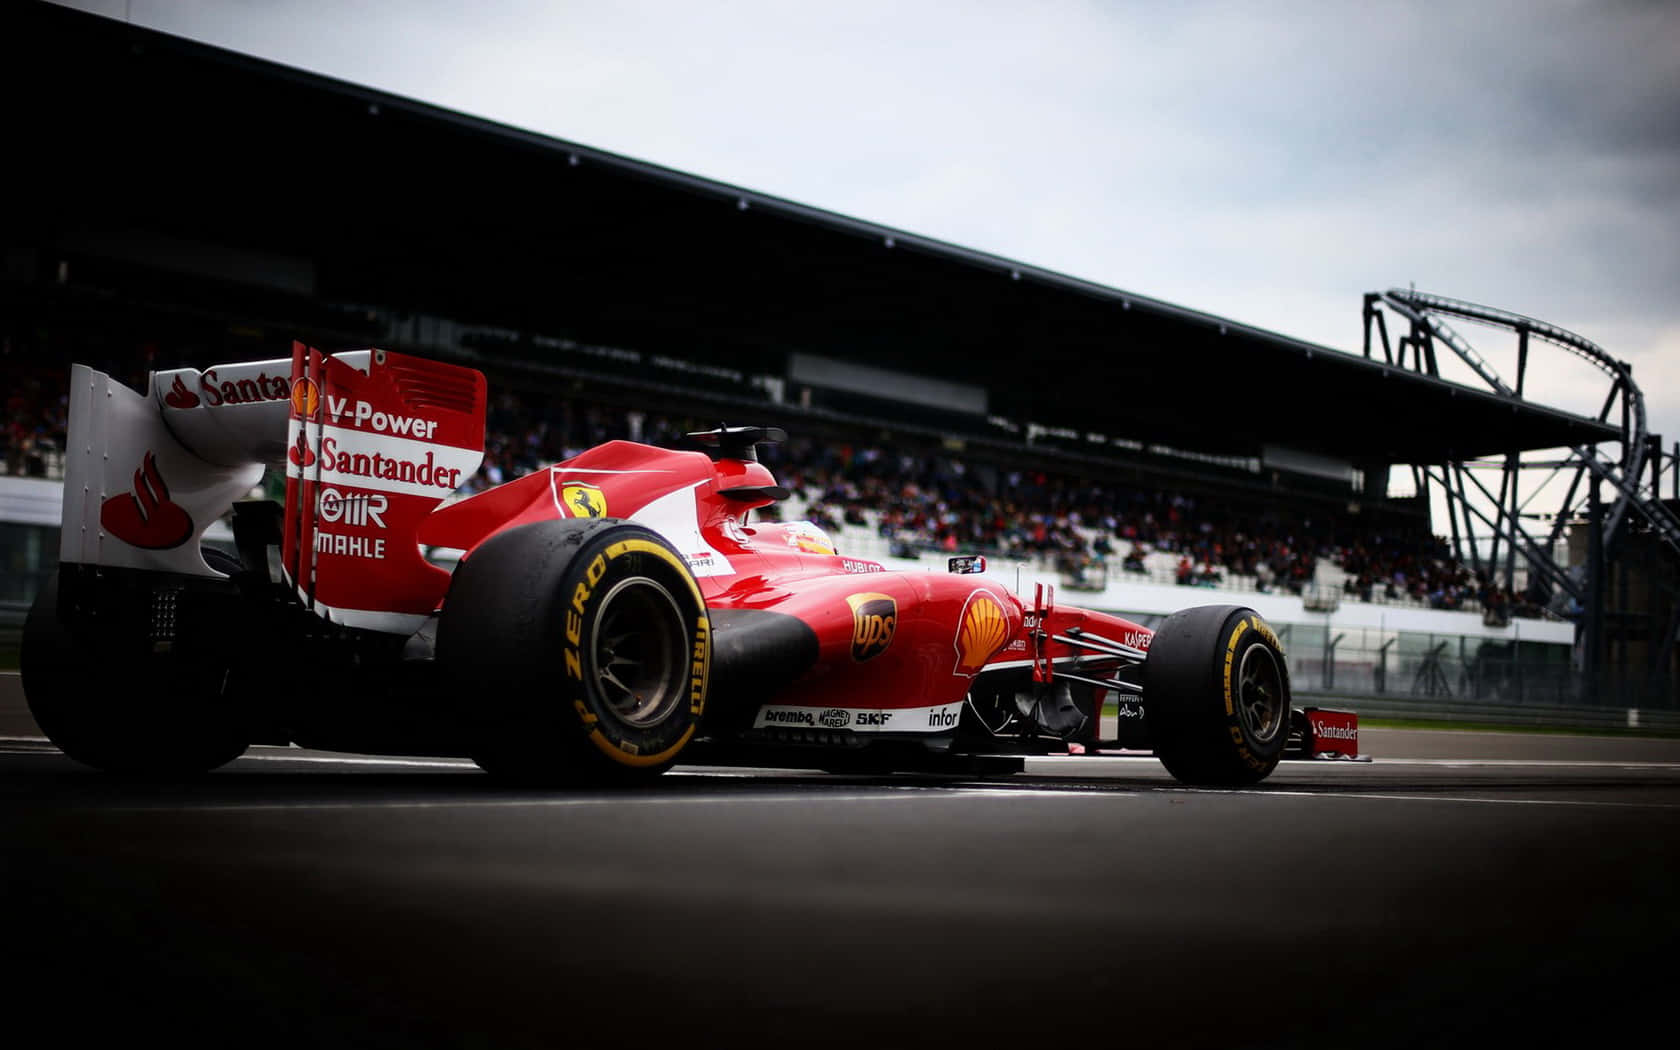 Ferrari F1 Car Driving On The Track